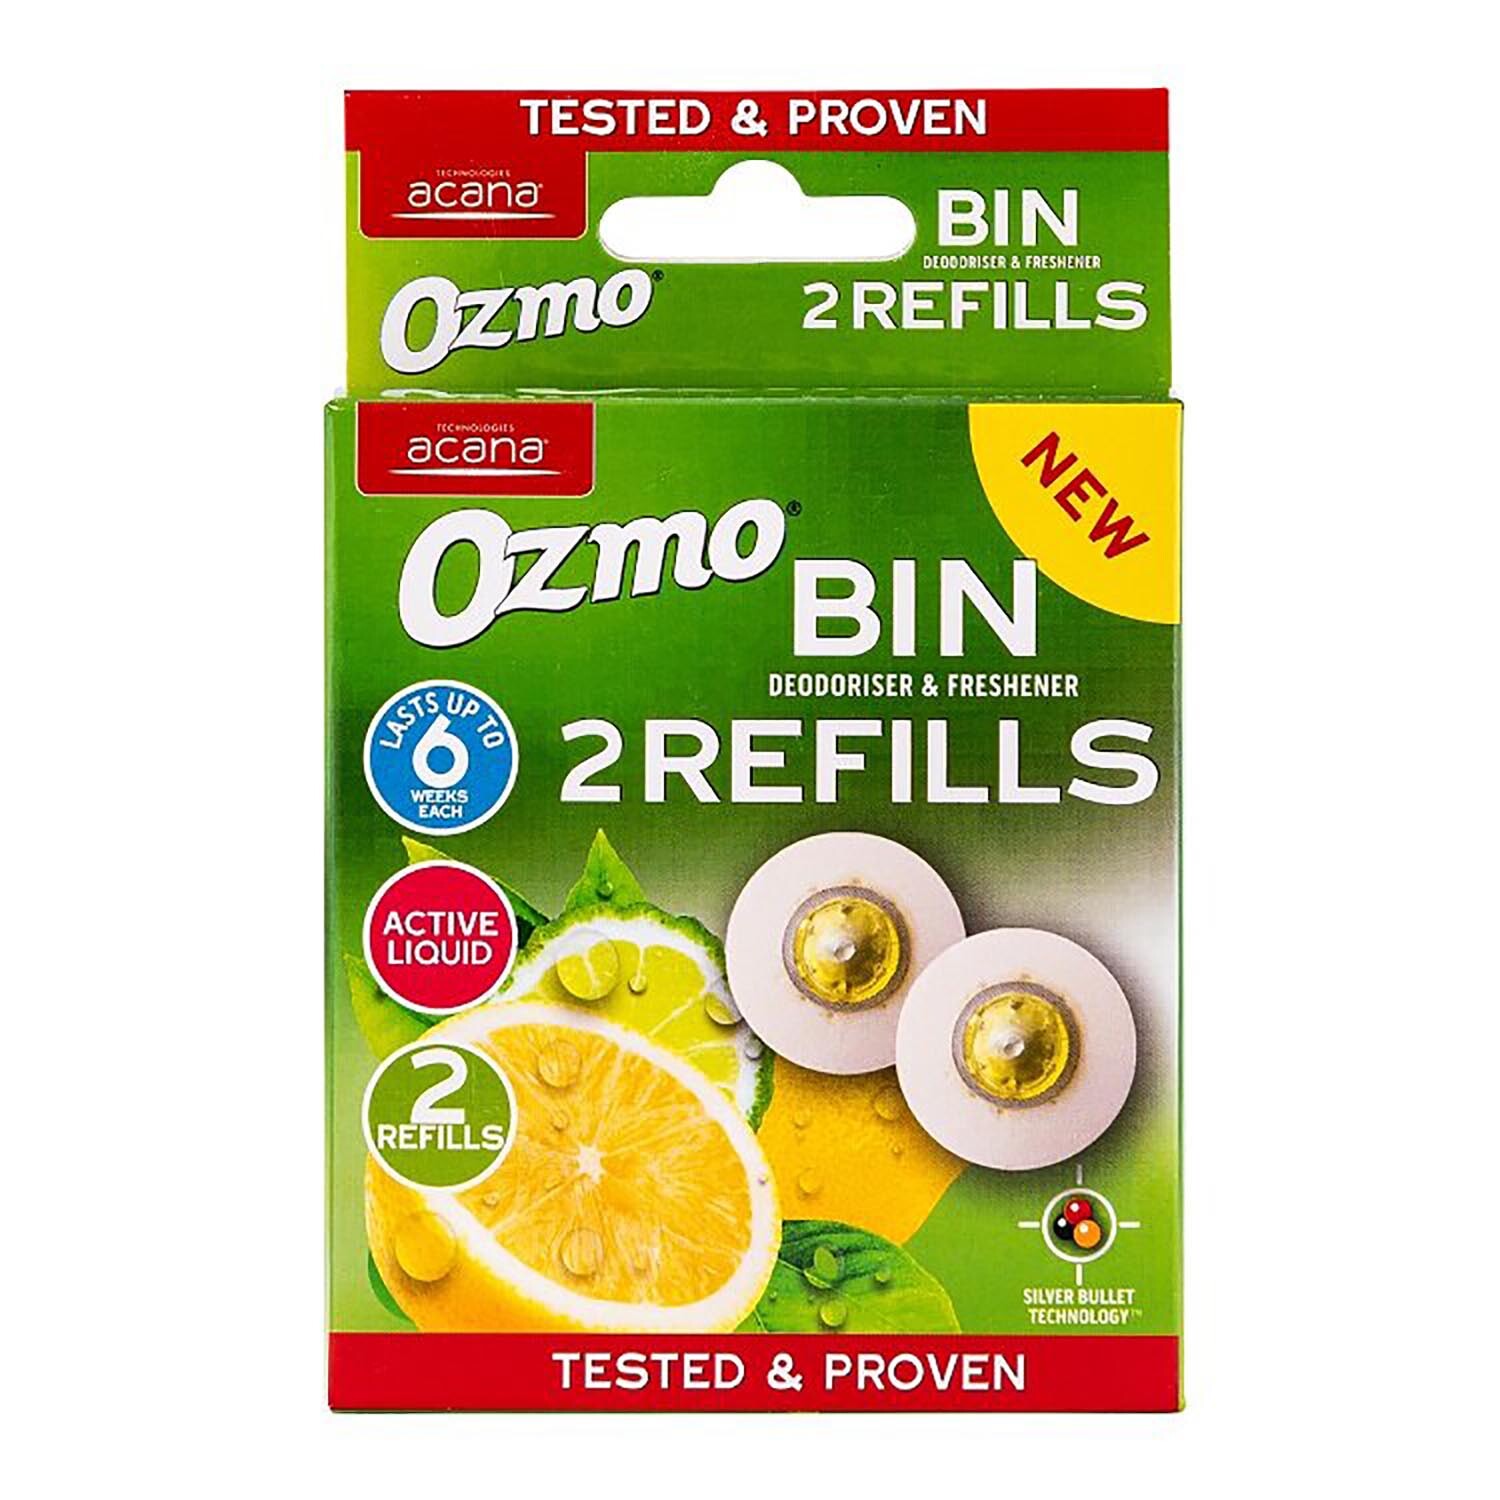 Ozmo Bin Deodoriser and Freshener Refills Image